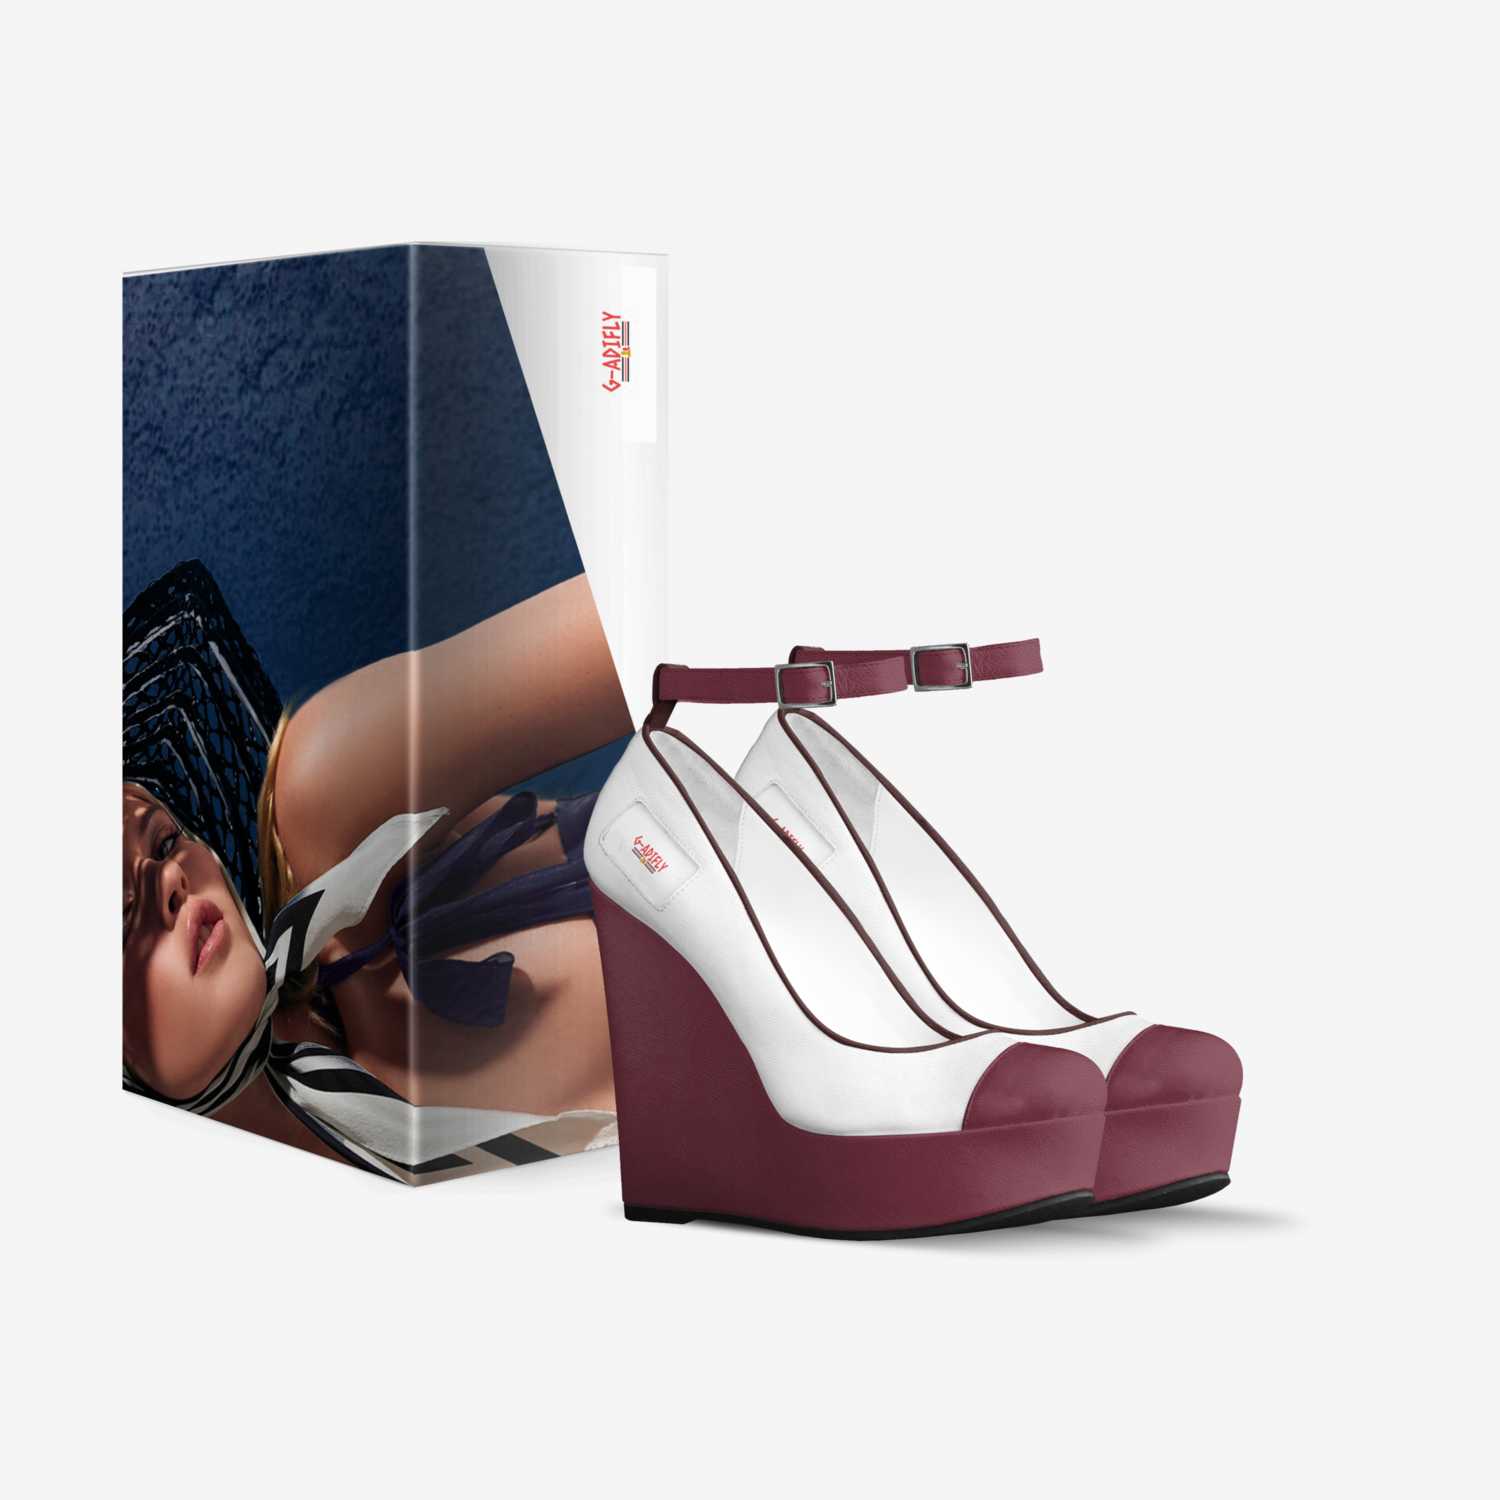 ADIFLY custom made in Italy shoes by Giovani Adiyo | Box view